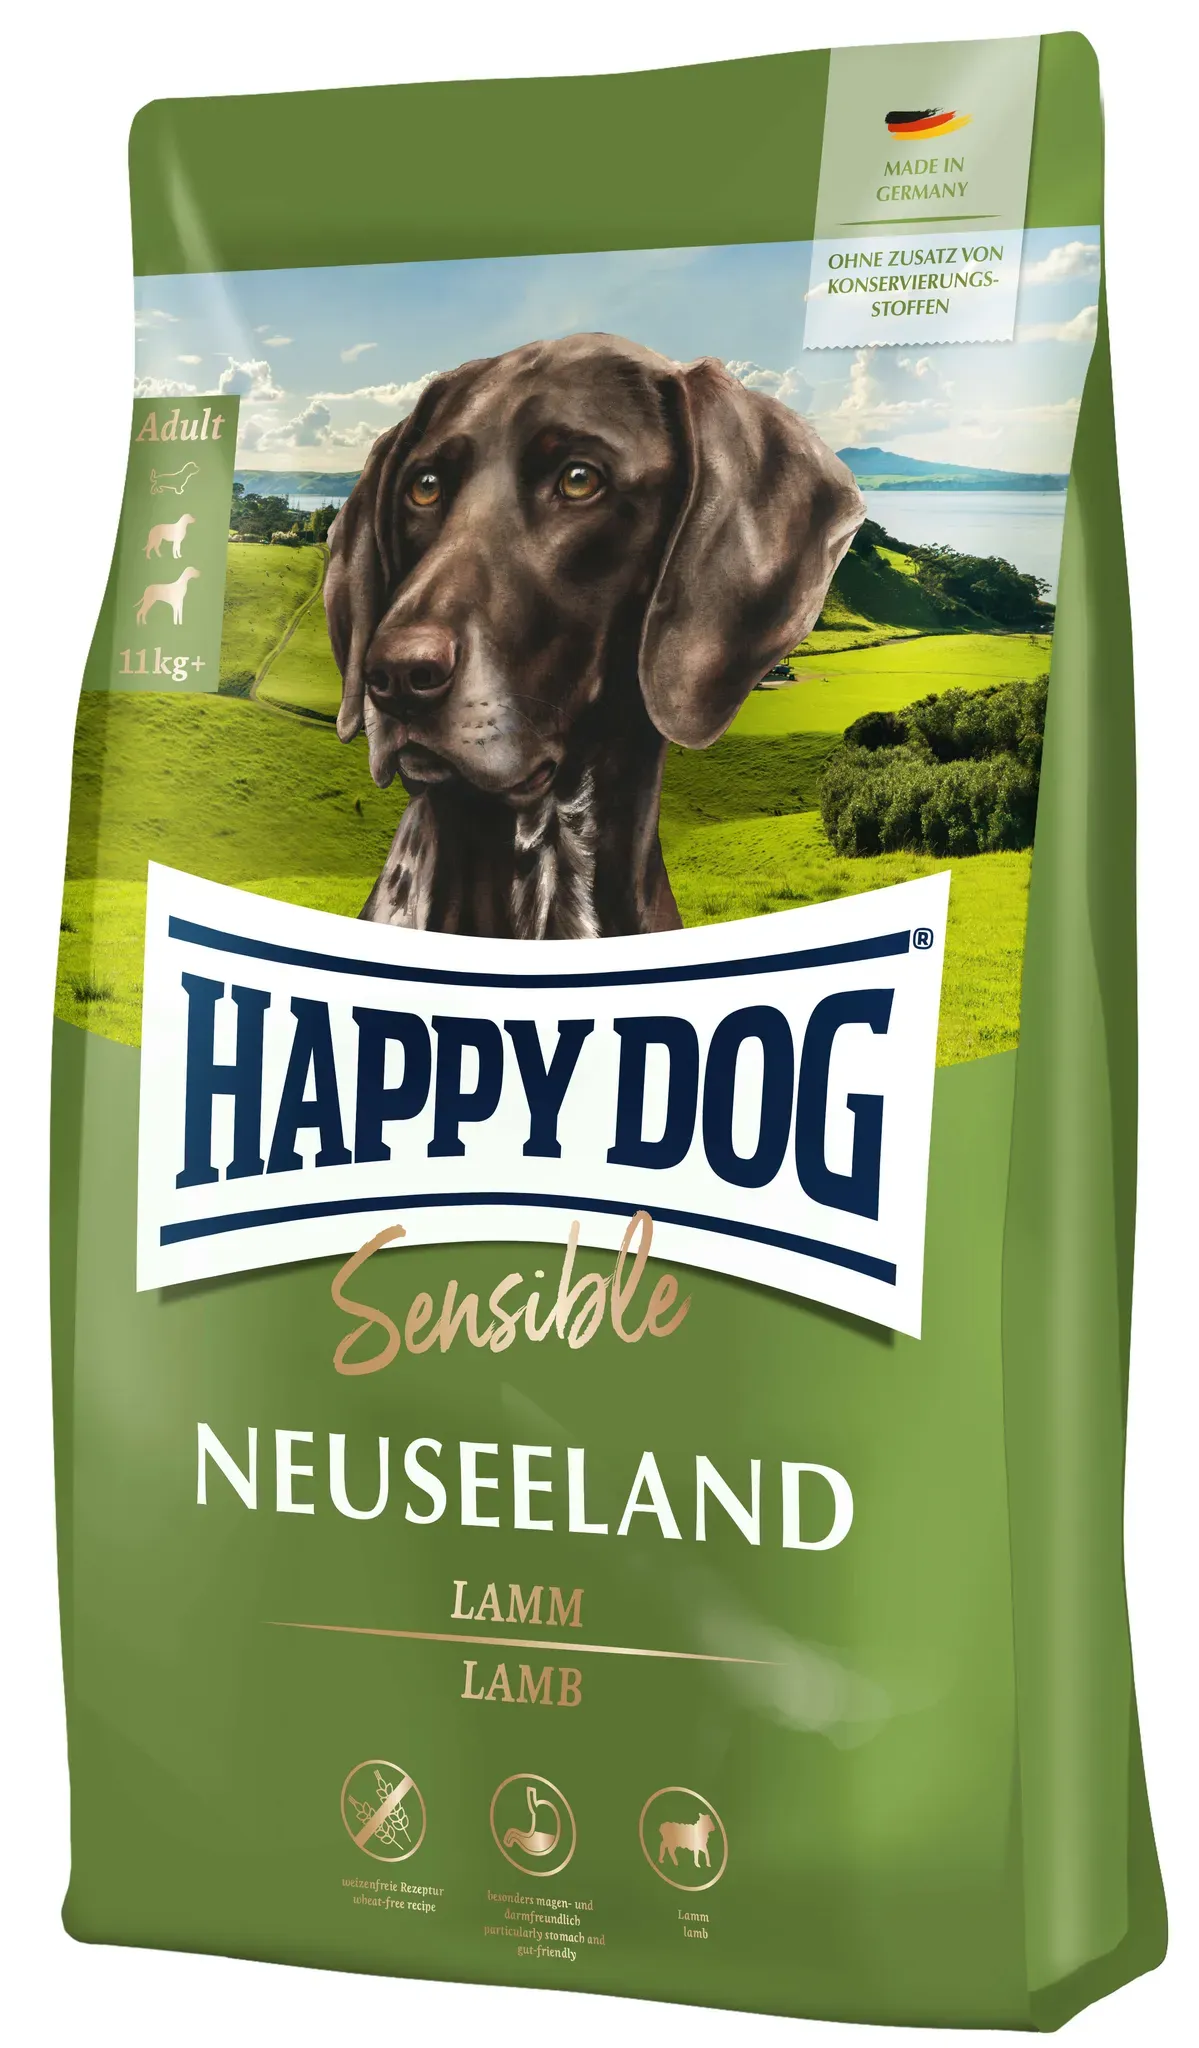 HAPPY DOG Hunde-Trockenfutter Sensible Neuseeland